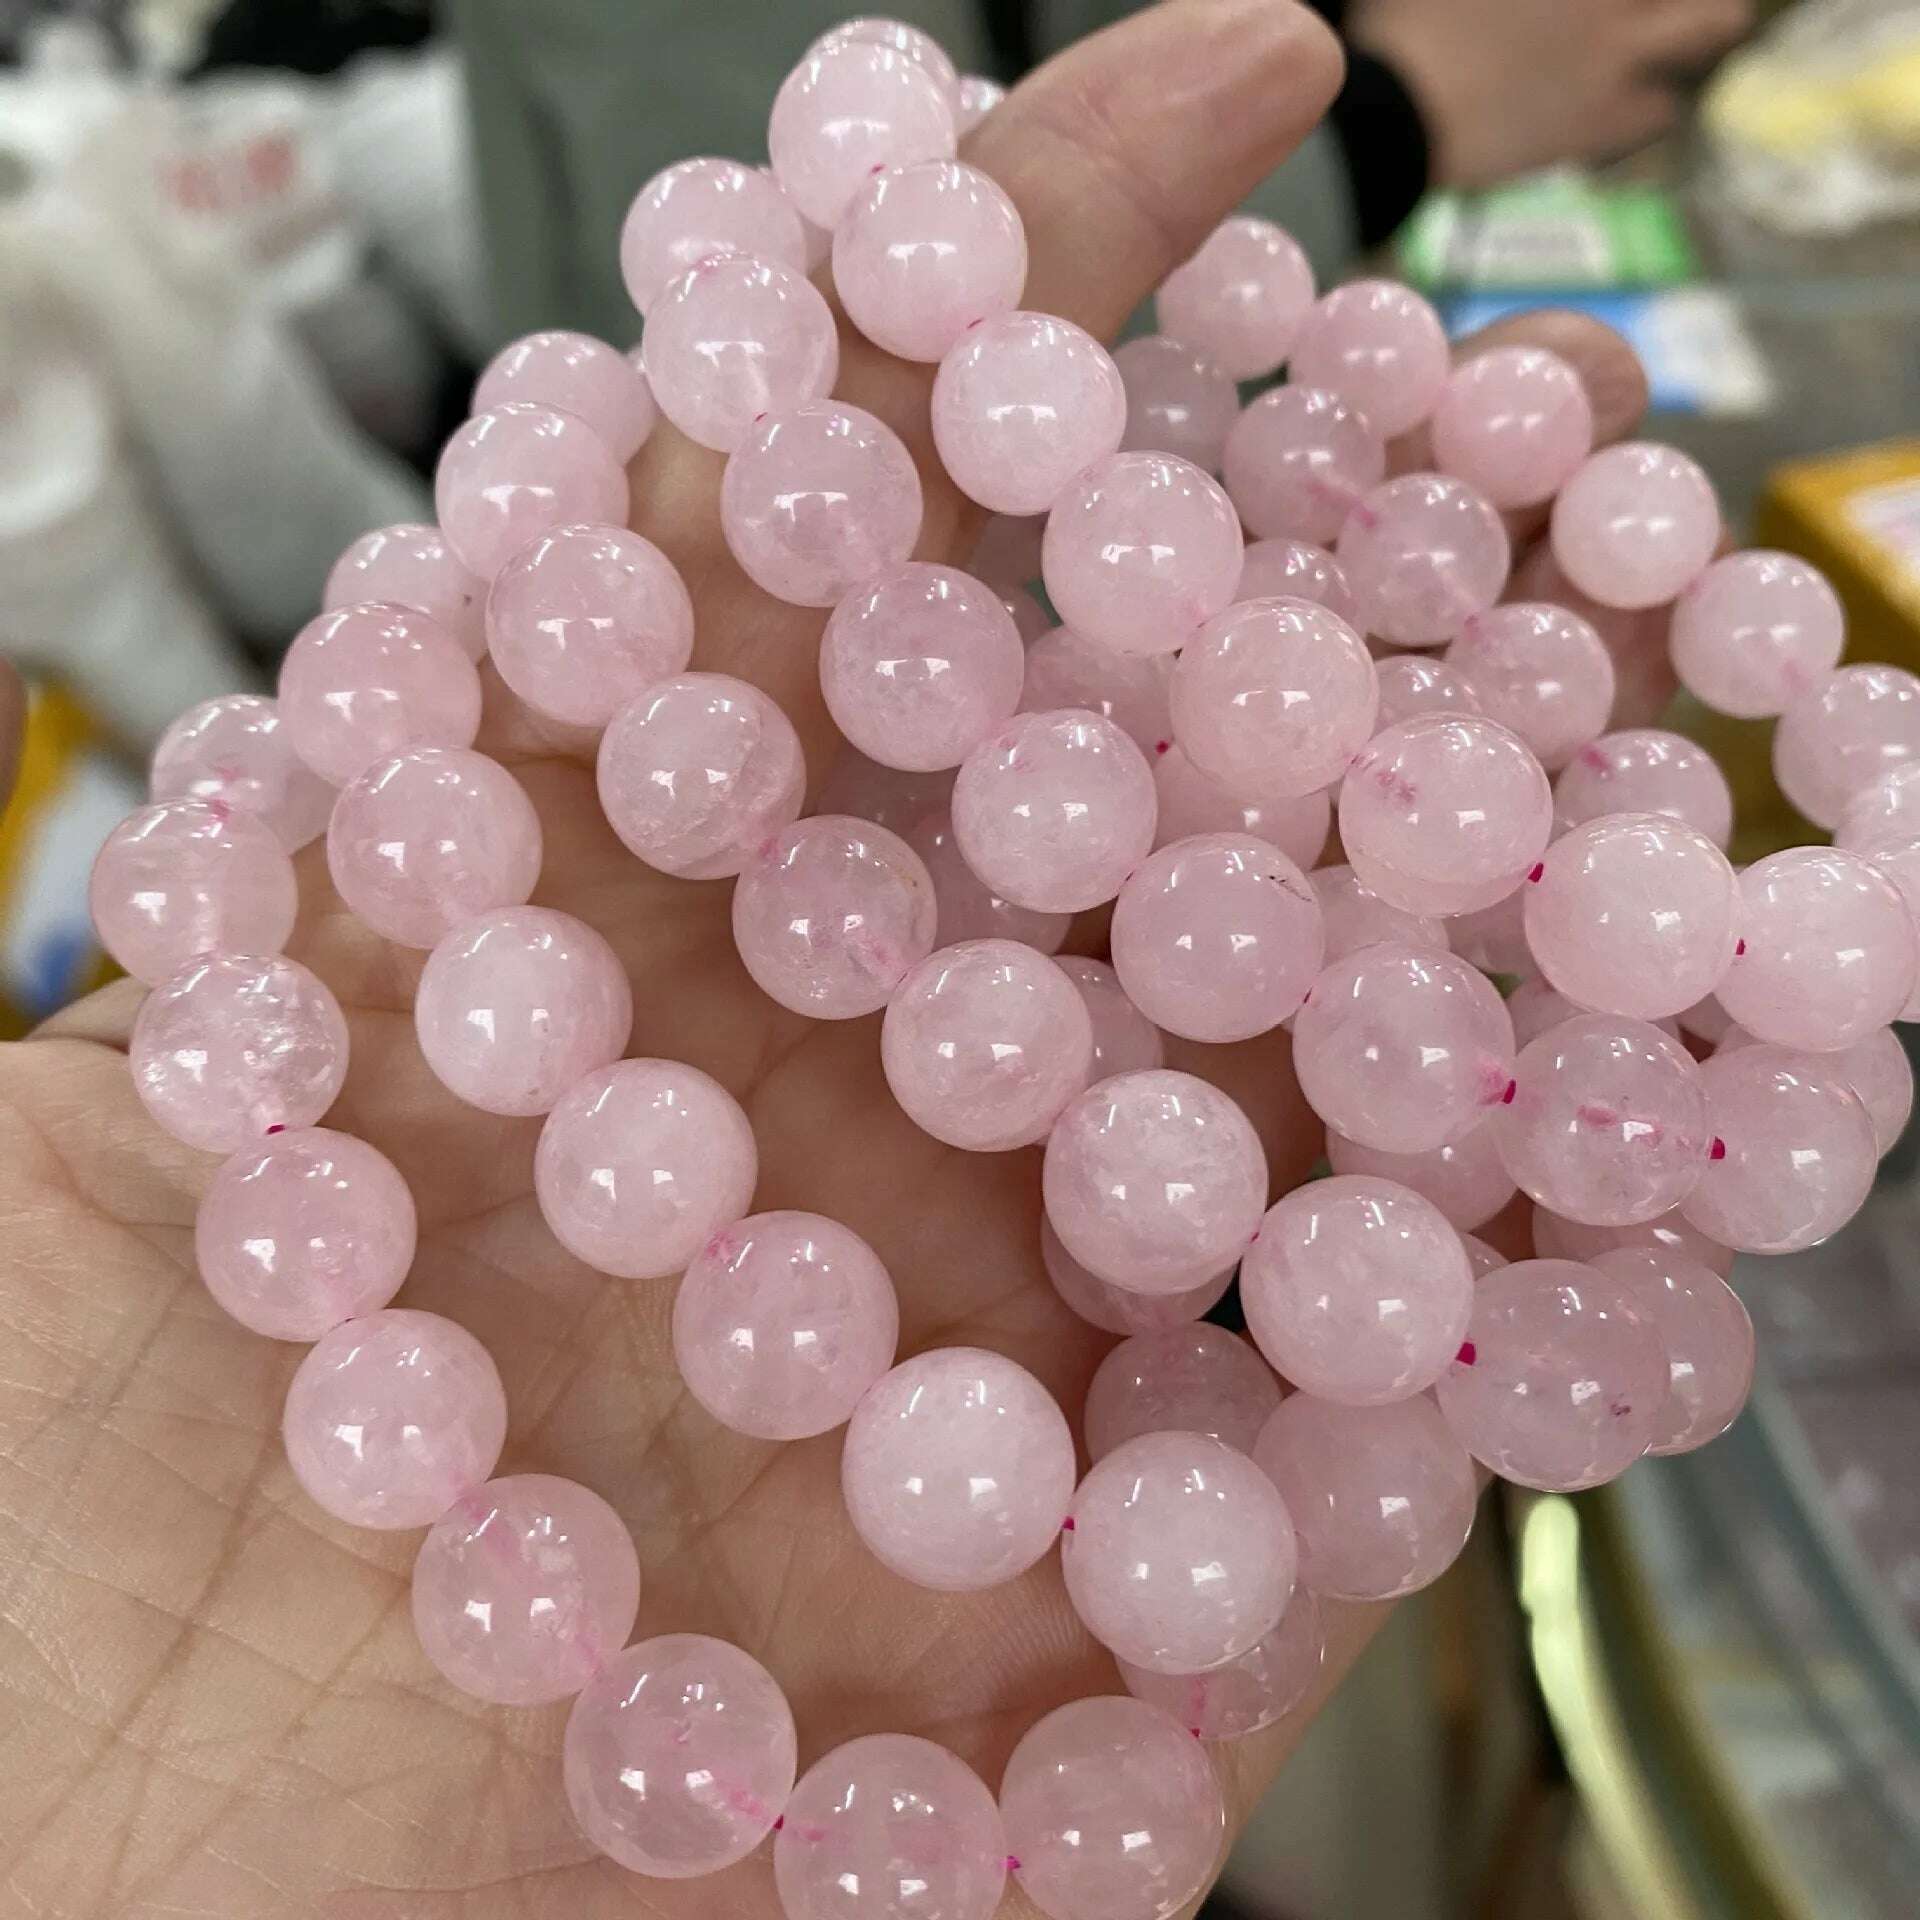 KIMLUD, Wholesale Natural Stone Pink Rose Quartz Beads Bracelet For Women Men Fashion Healing Crystal Yoga Jewelry Gift, KIMLUD Womens Clothes